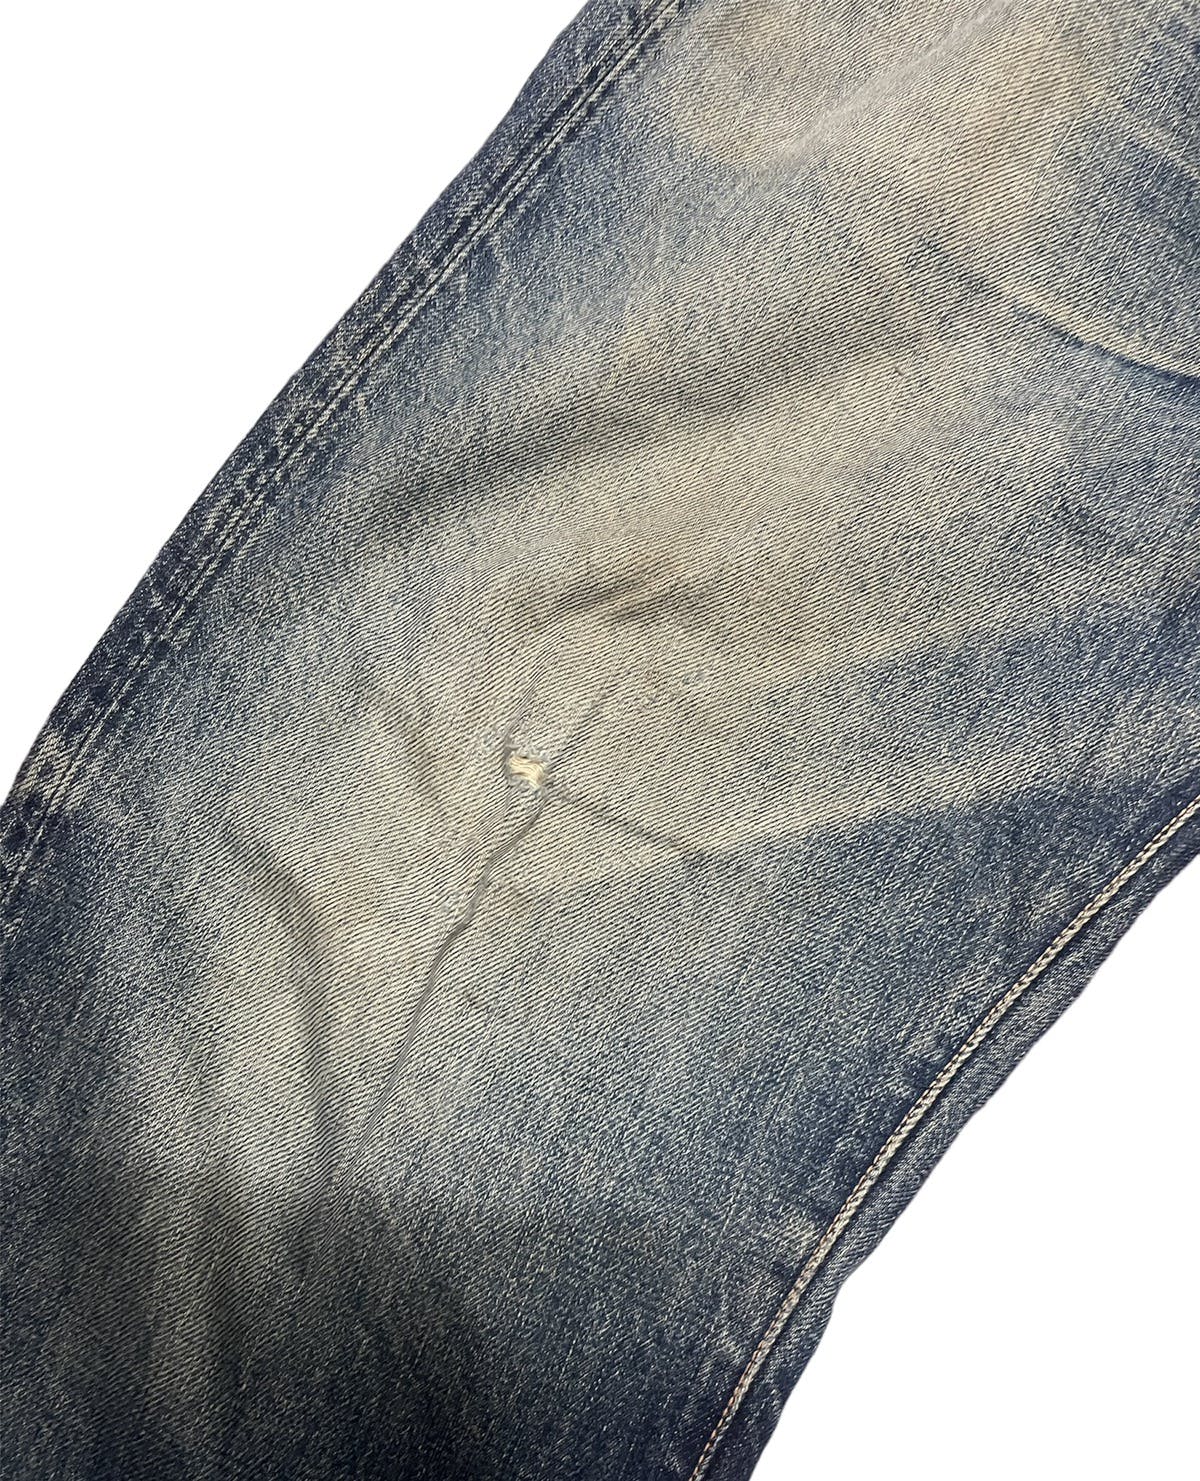 Evisu Denim distressed selvedge jeans - 6